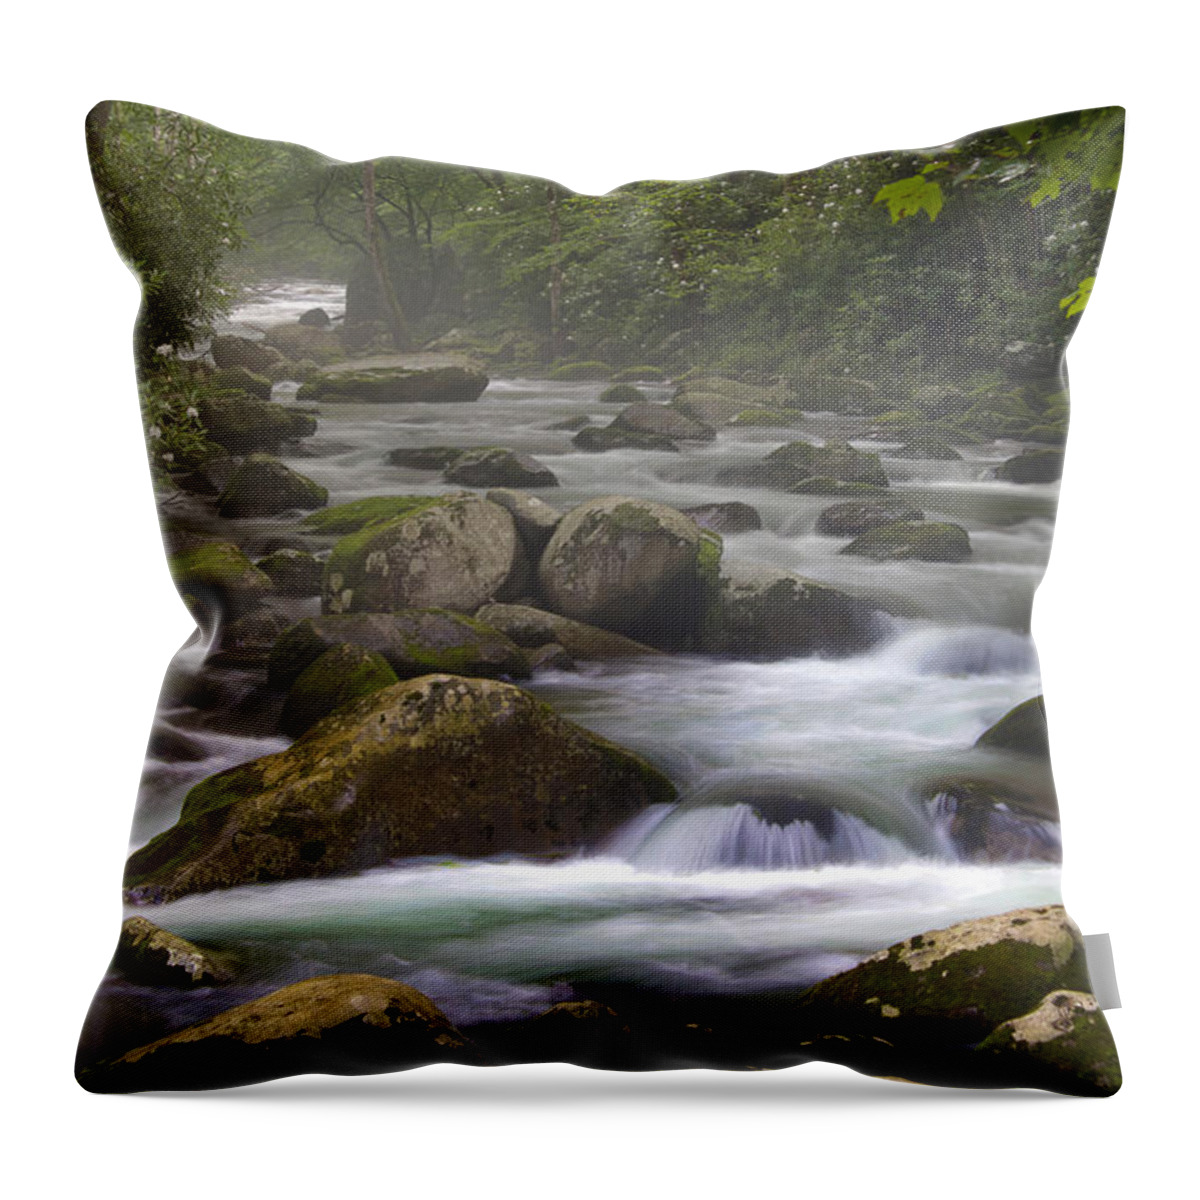 Nunweiler Throw Pillow featuring the photograph Big Creek Trail by Nunweiler Photography